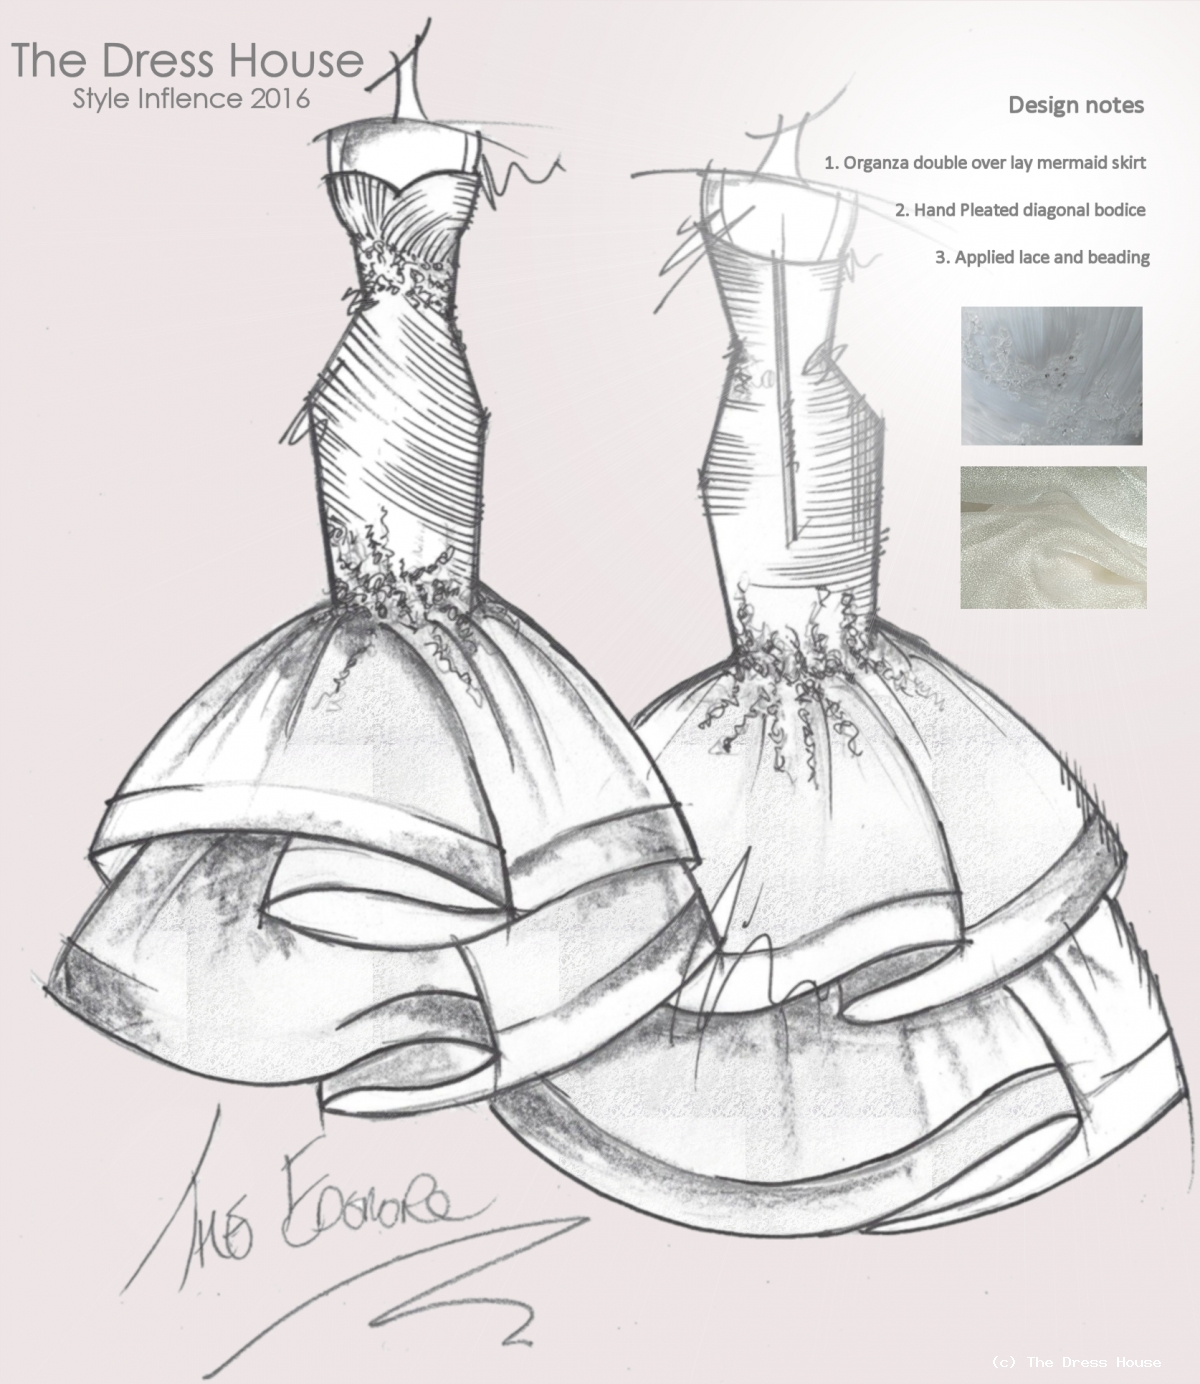 New Wedding Dress Arrival | News | The Dress House